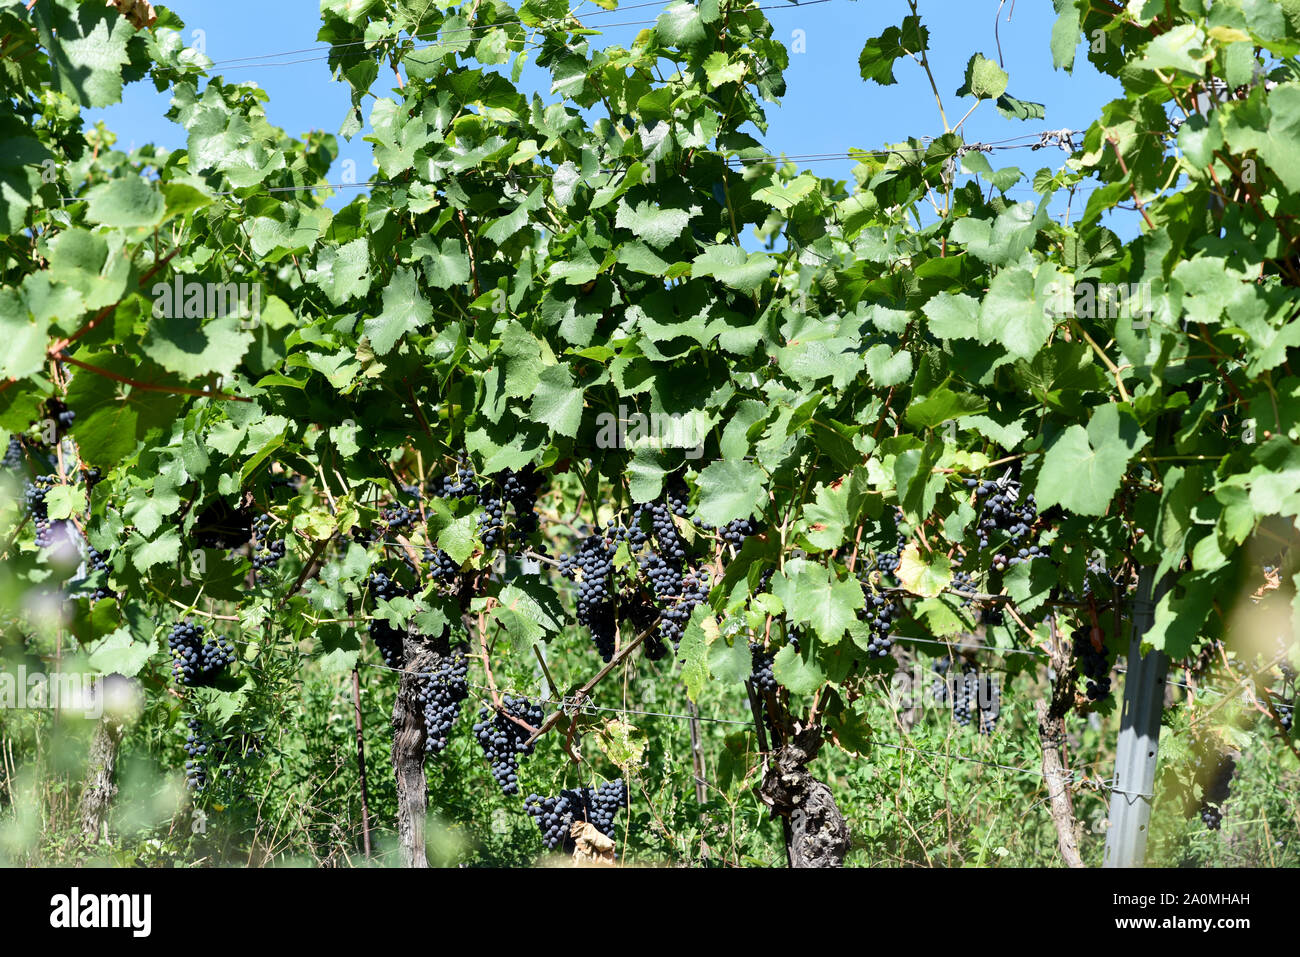 Der Dornfelder, ist eine Rotweinsorte mit blauen Trauben. Le Dornfelder, est un vin rouge variété avec raisins bleus. Banque D'Images